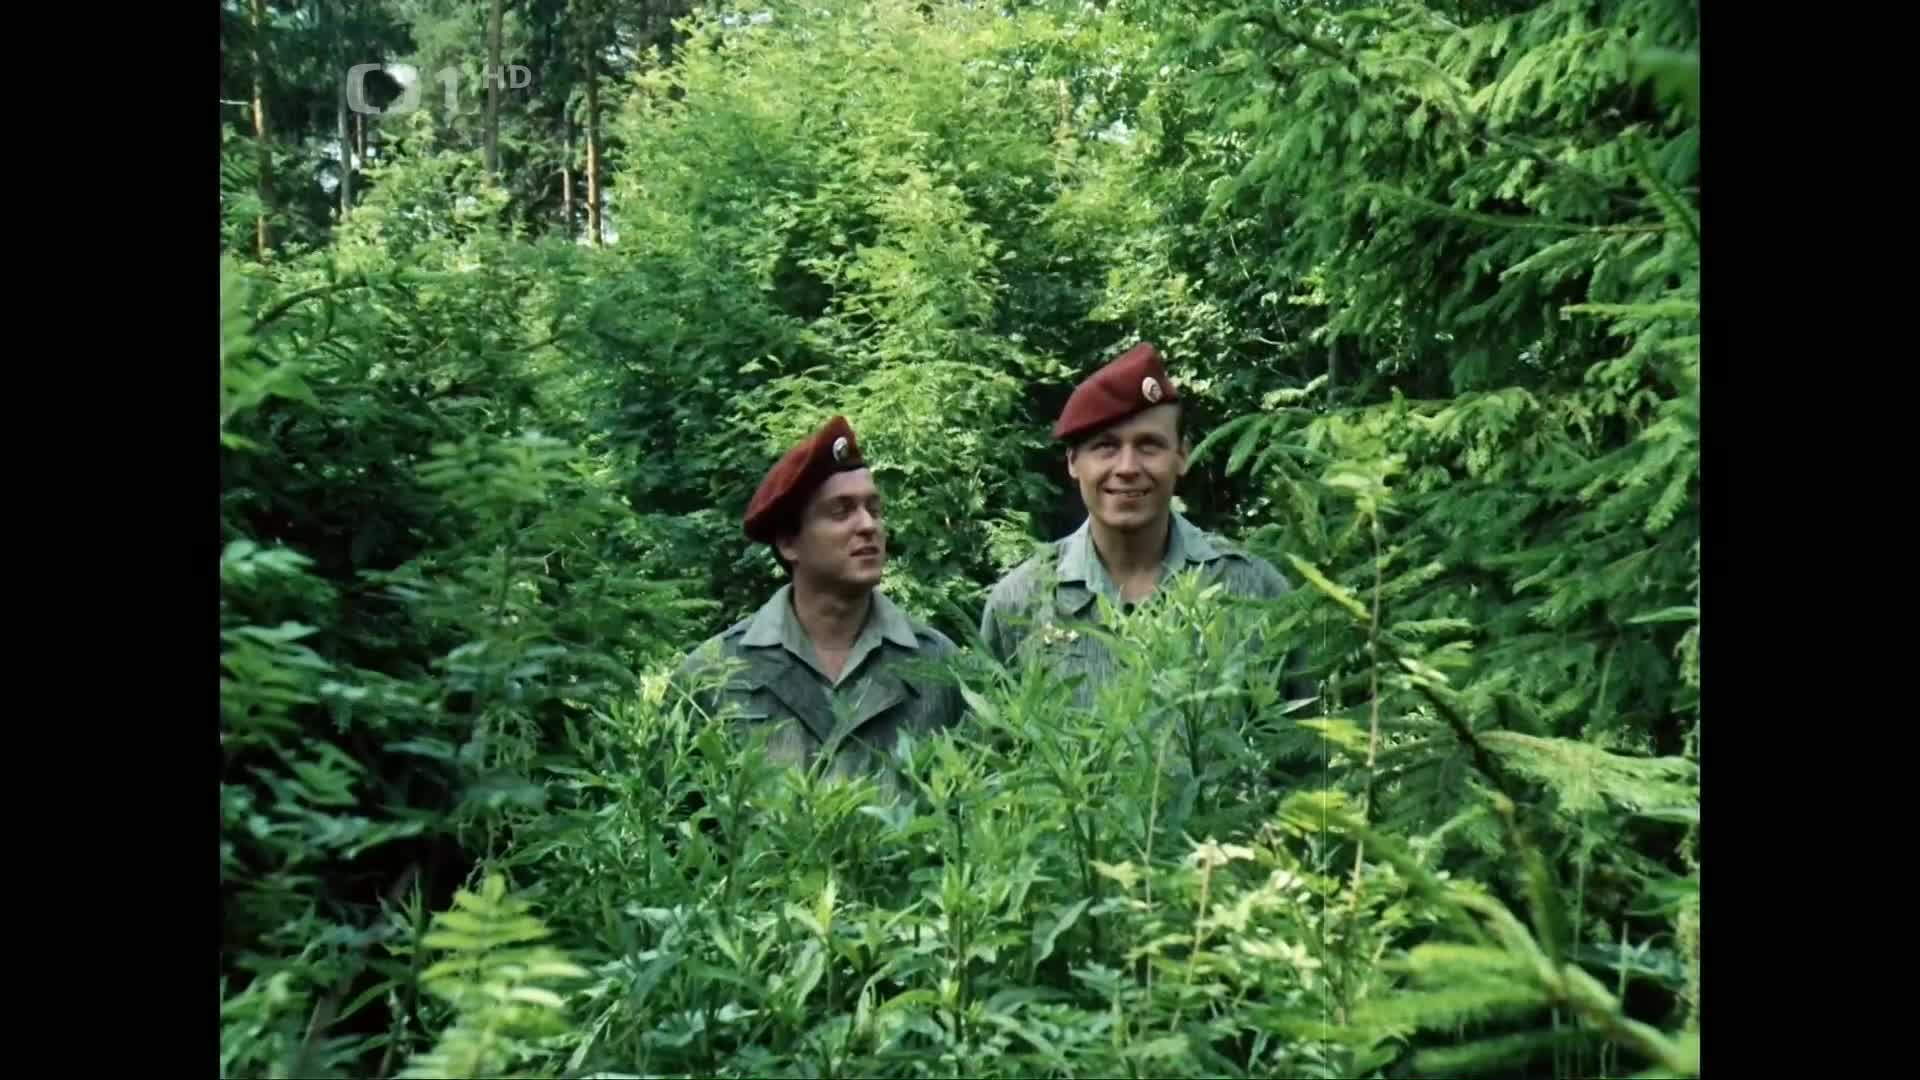 Copak je to za vojáka (1987) 1080p mkv